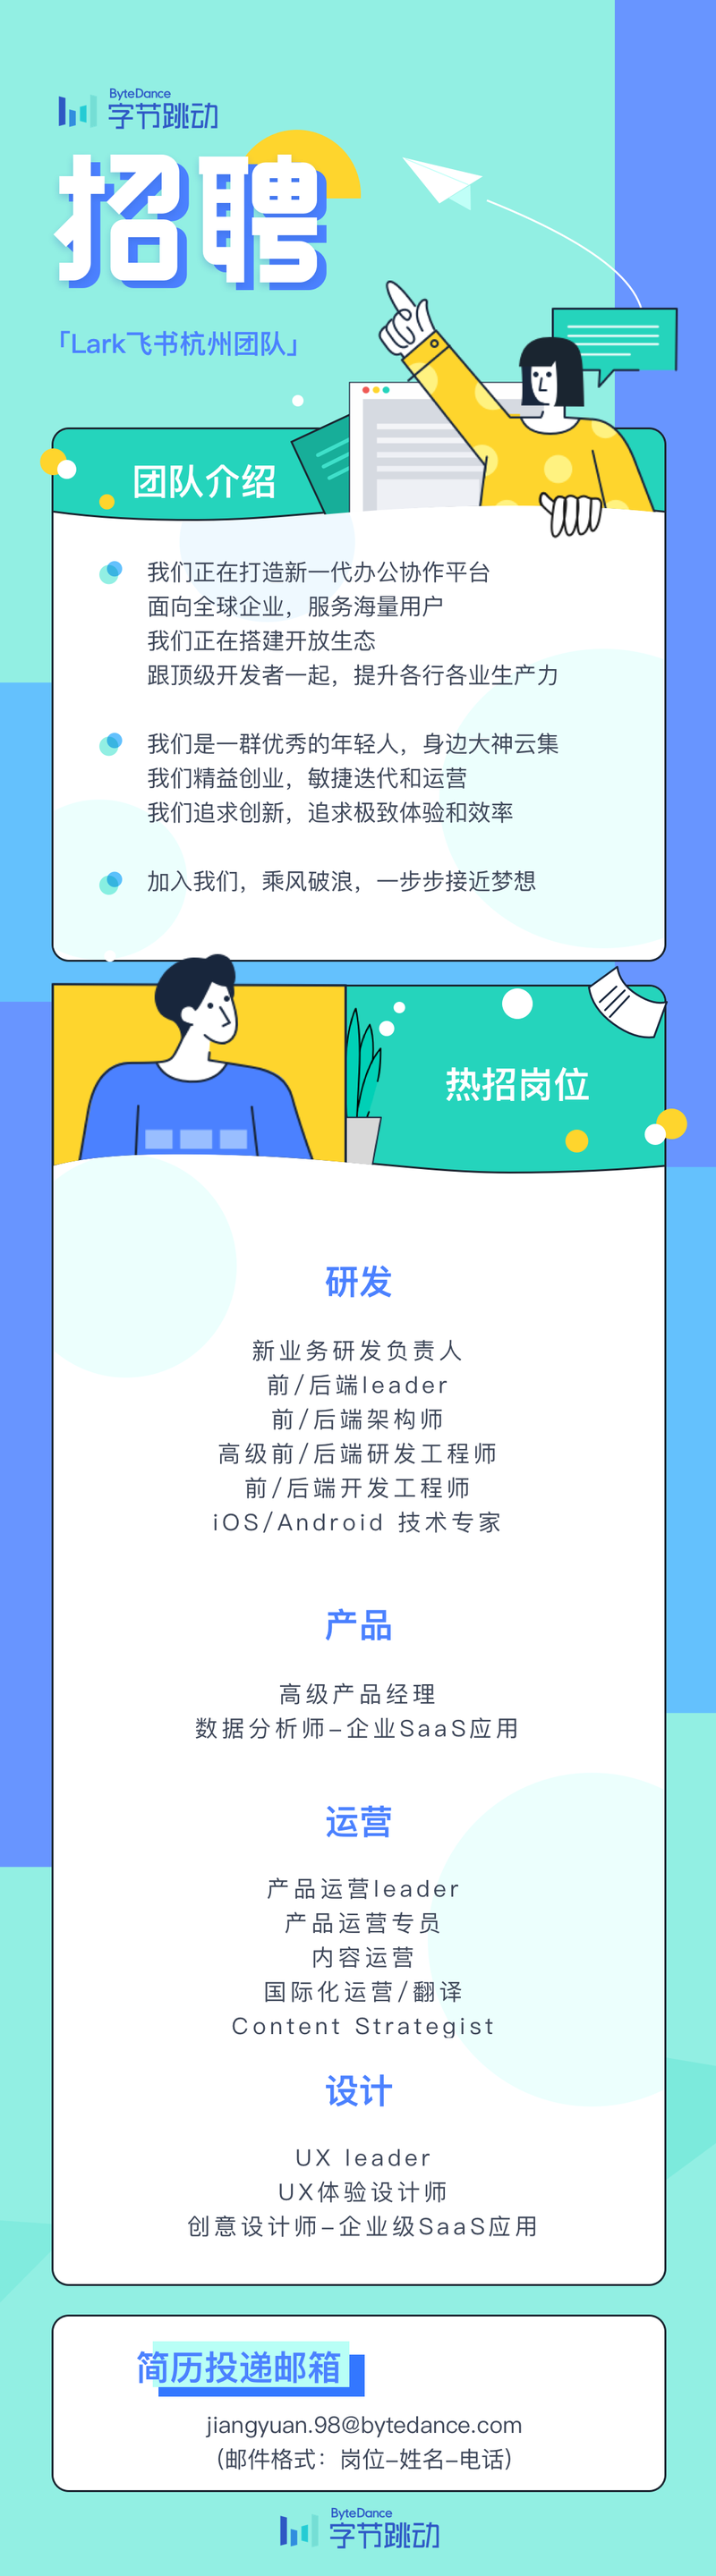 Jyuan于2019-09-09 15:17发布的图片